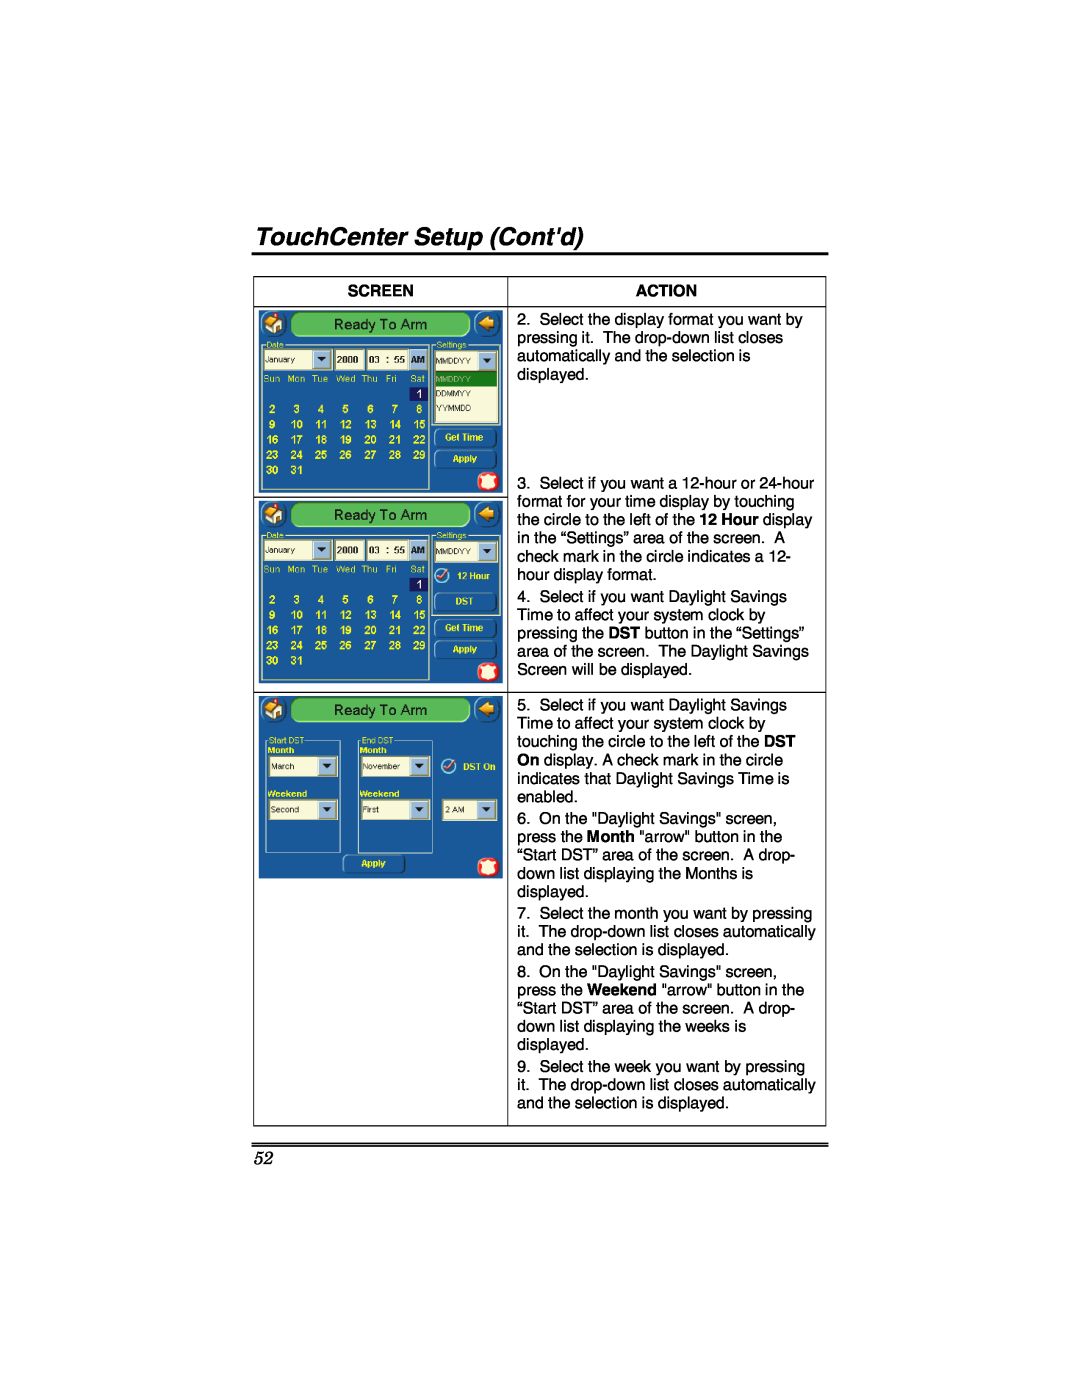 Honeywell 6271 manual TouchCenter Setup Contd, Screen, Action 